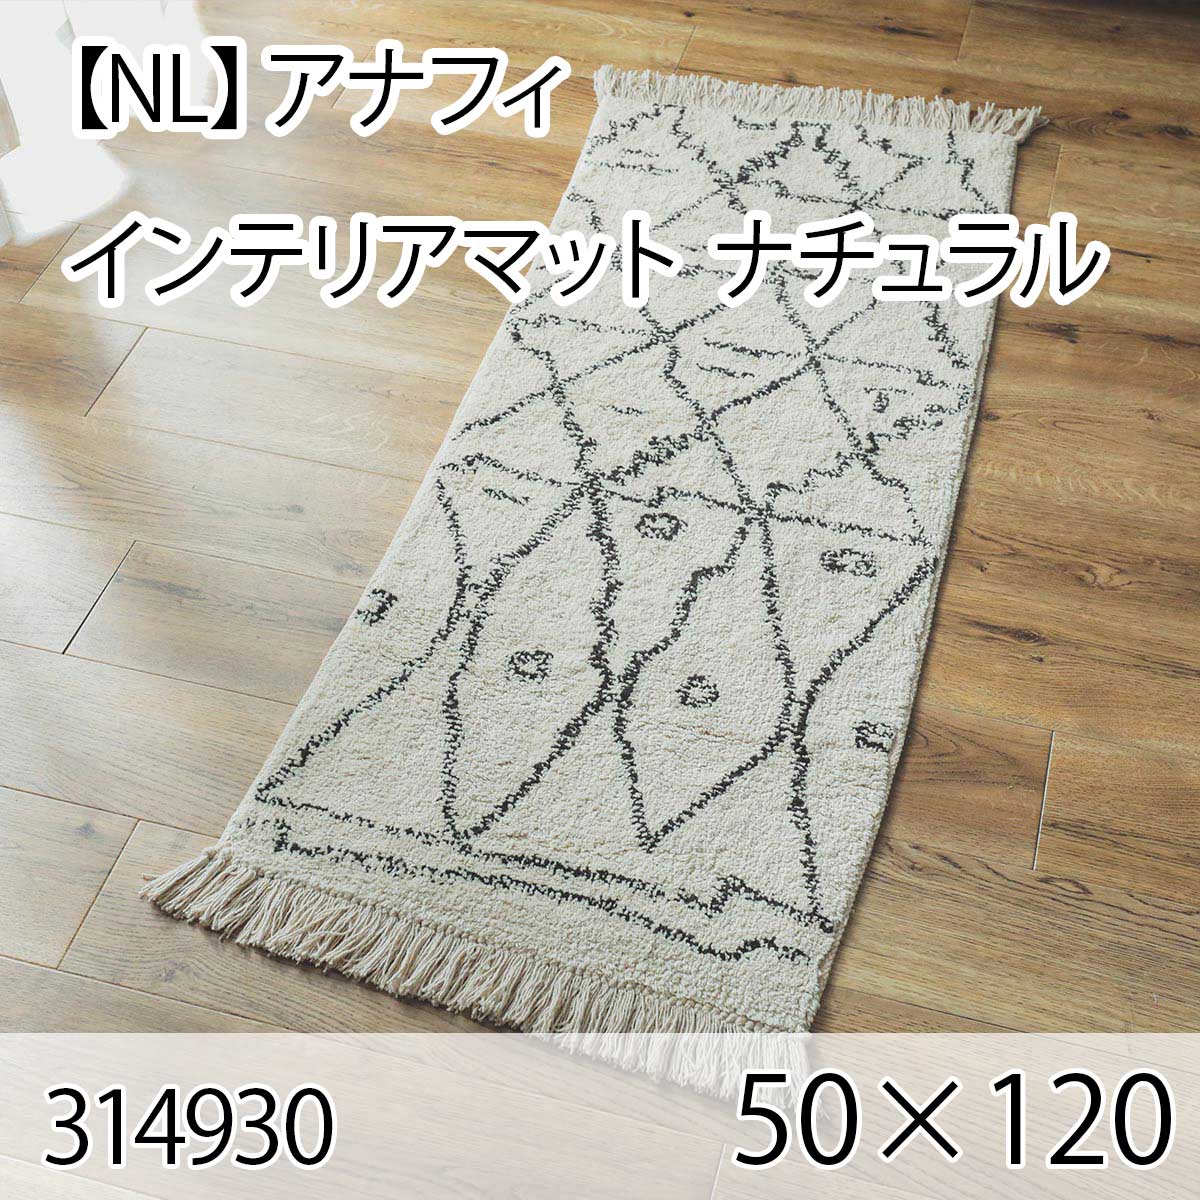 【NL】アナフィ インテリアマット 50×120 ナチュラル